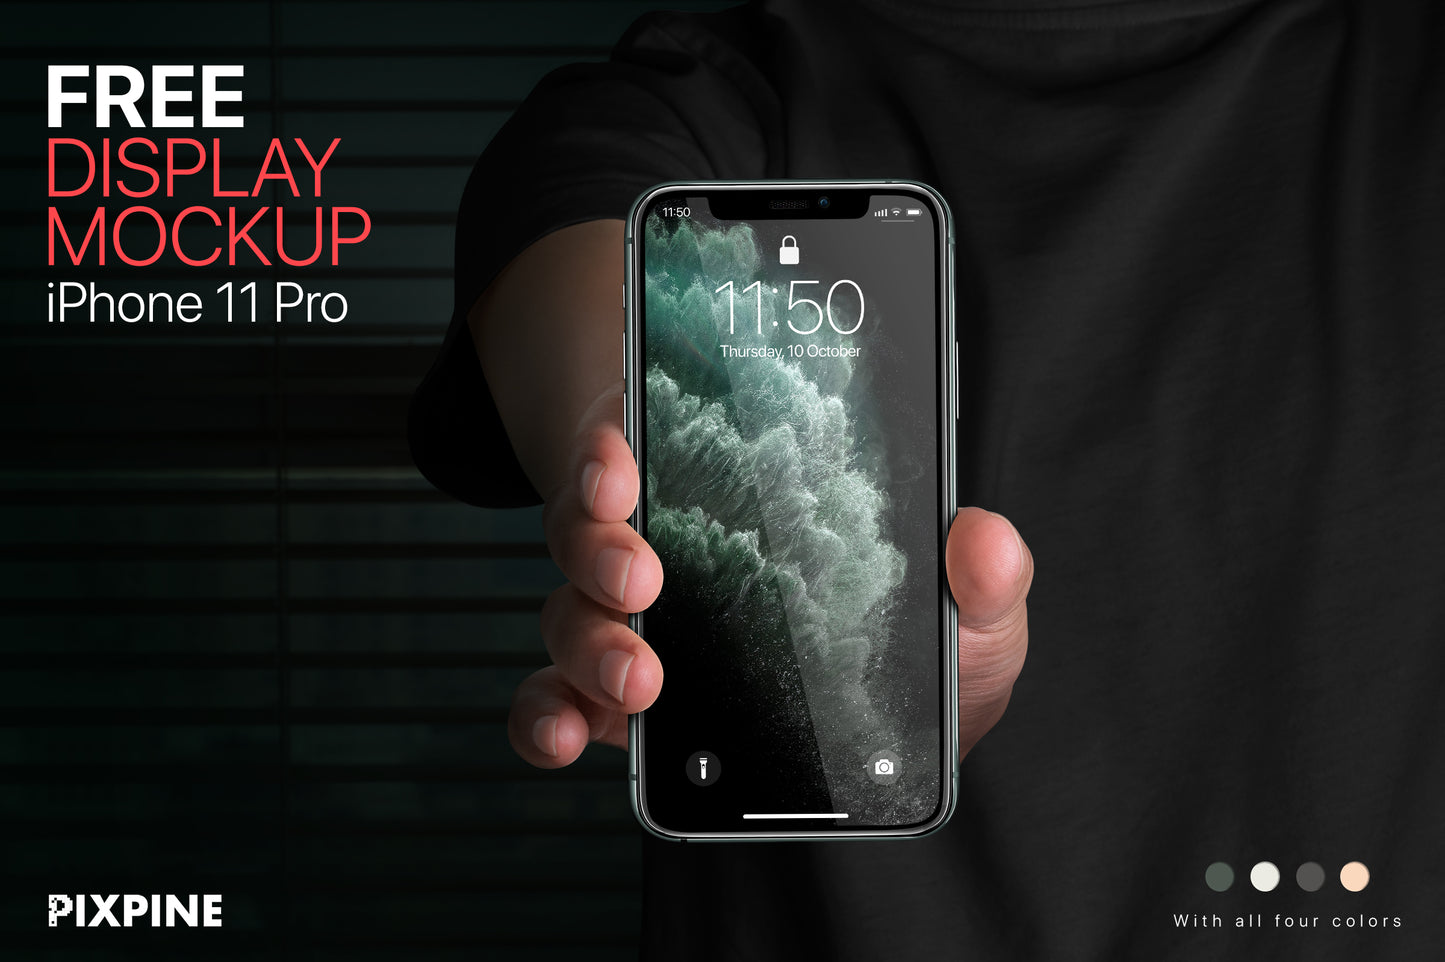 Free Iphone 11 Pro Mockup